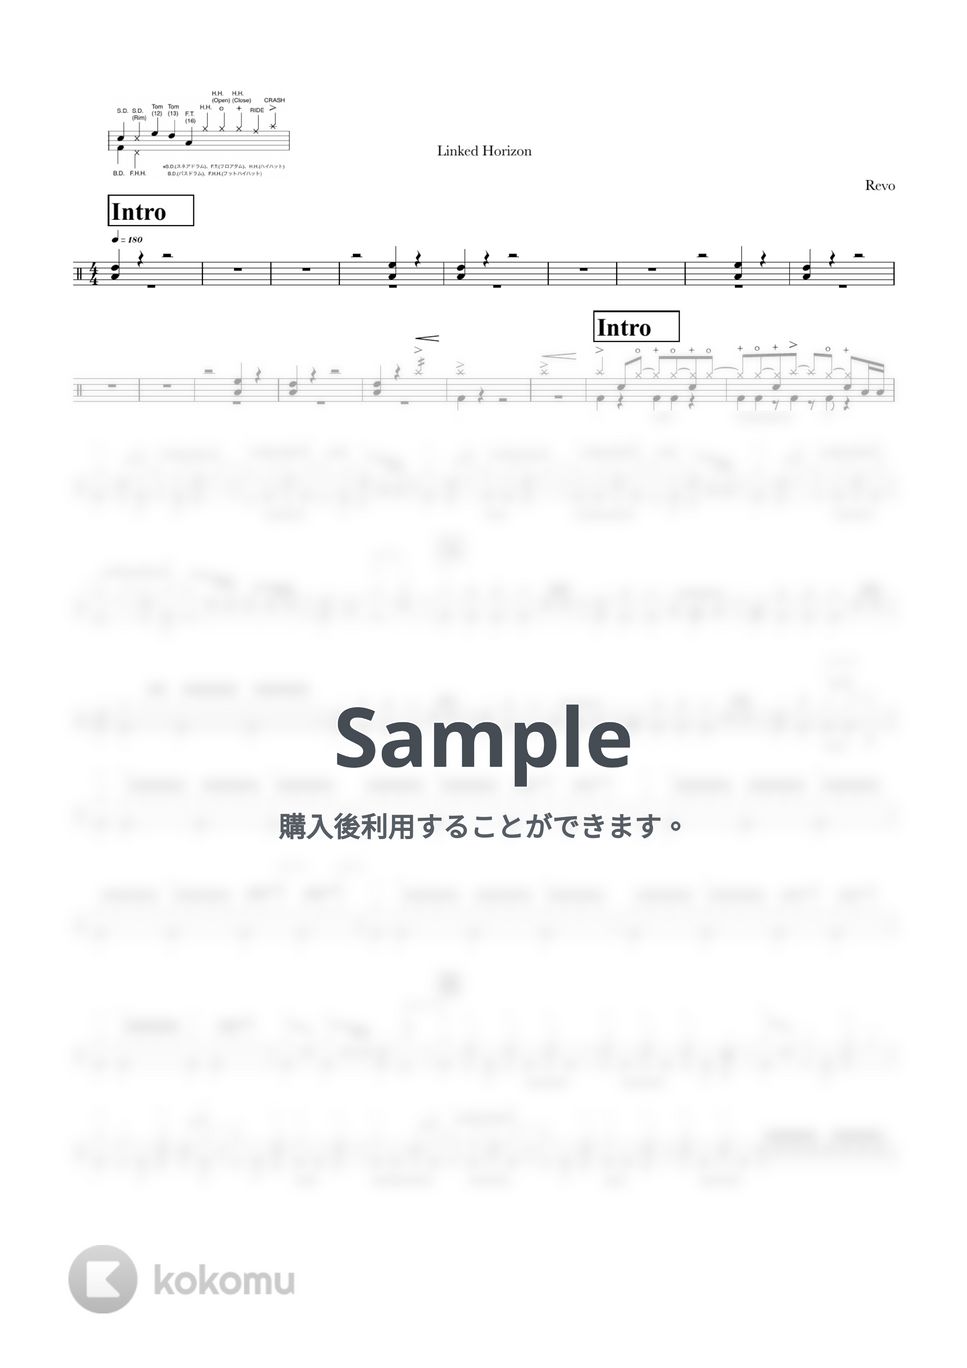 Linked Horizon - 紅蓮の弓矢 (DRUM SCORE) by ONEDRUMS